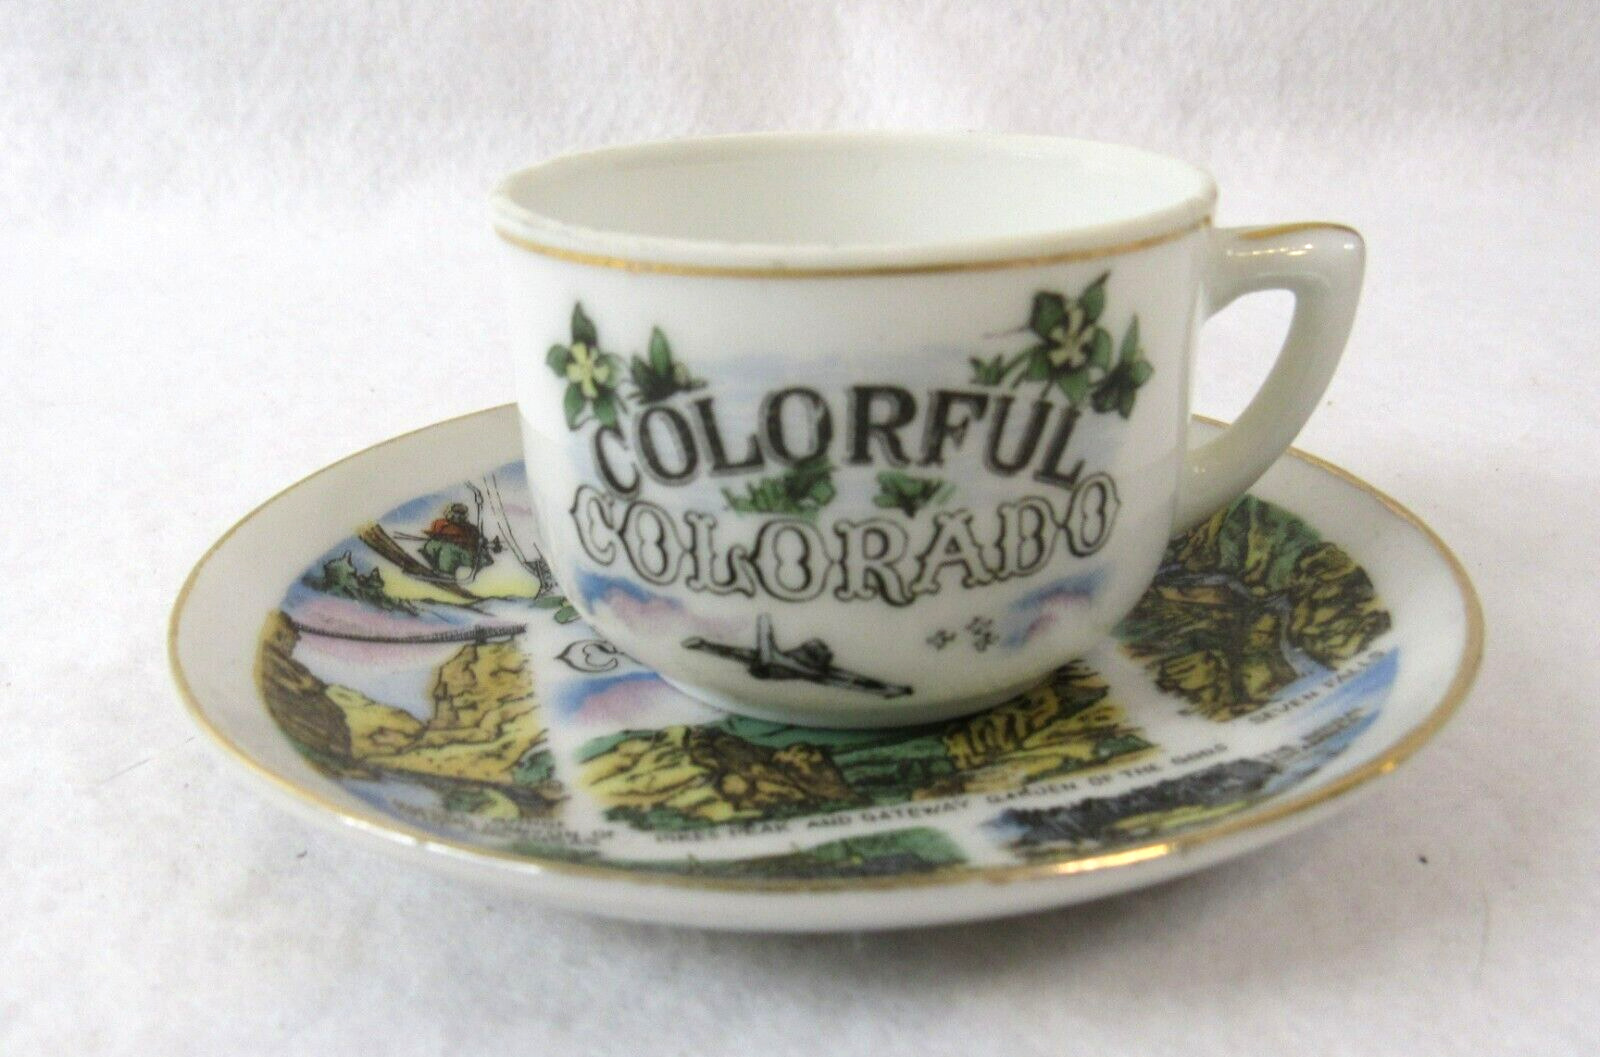 Vintage Thrifco Colorful Colorado Souvenir Cup Saucer Made in Japan